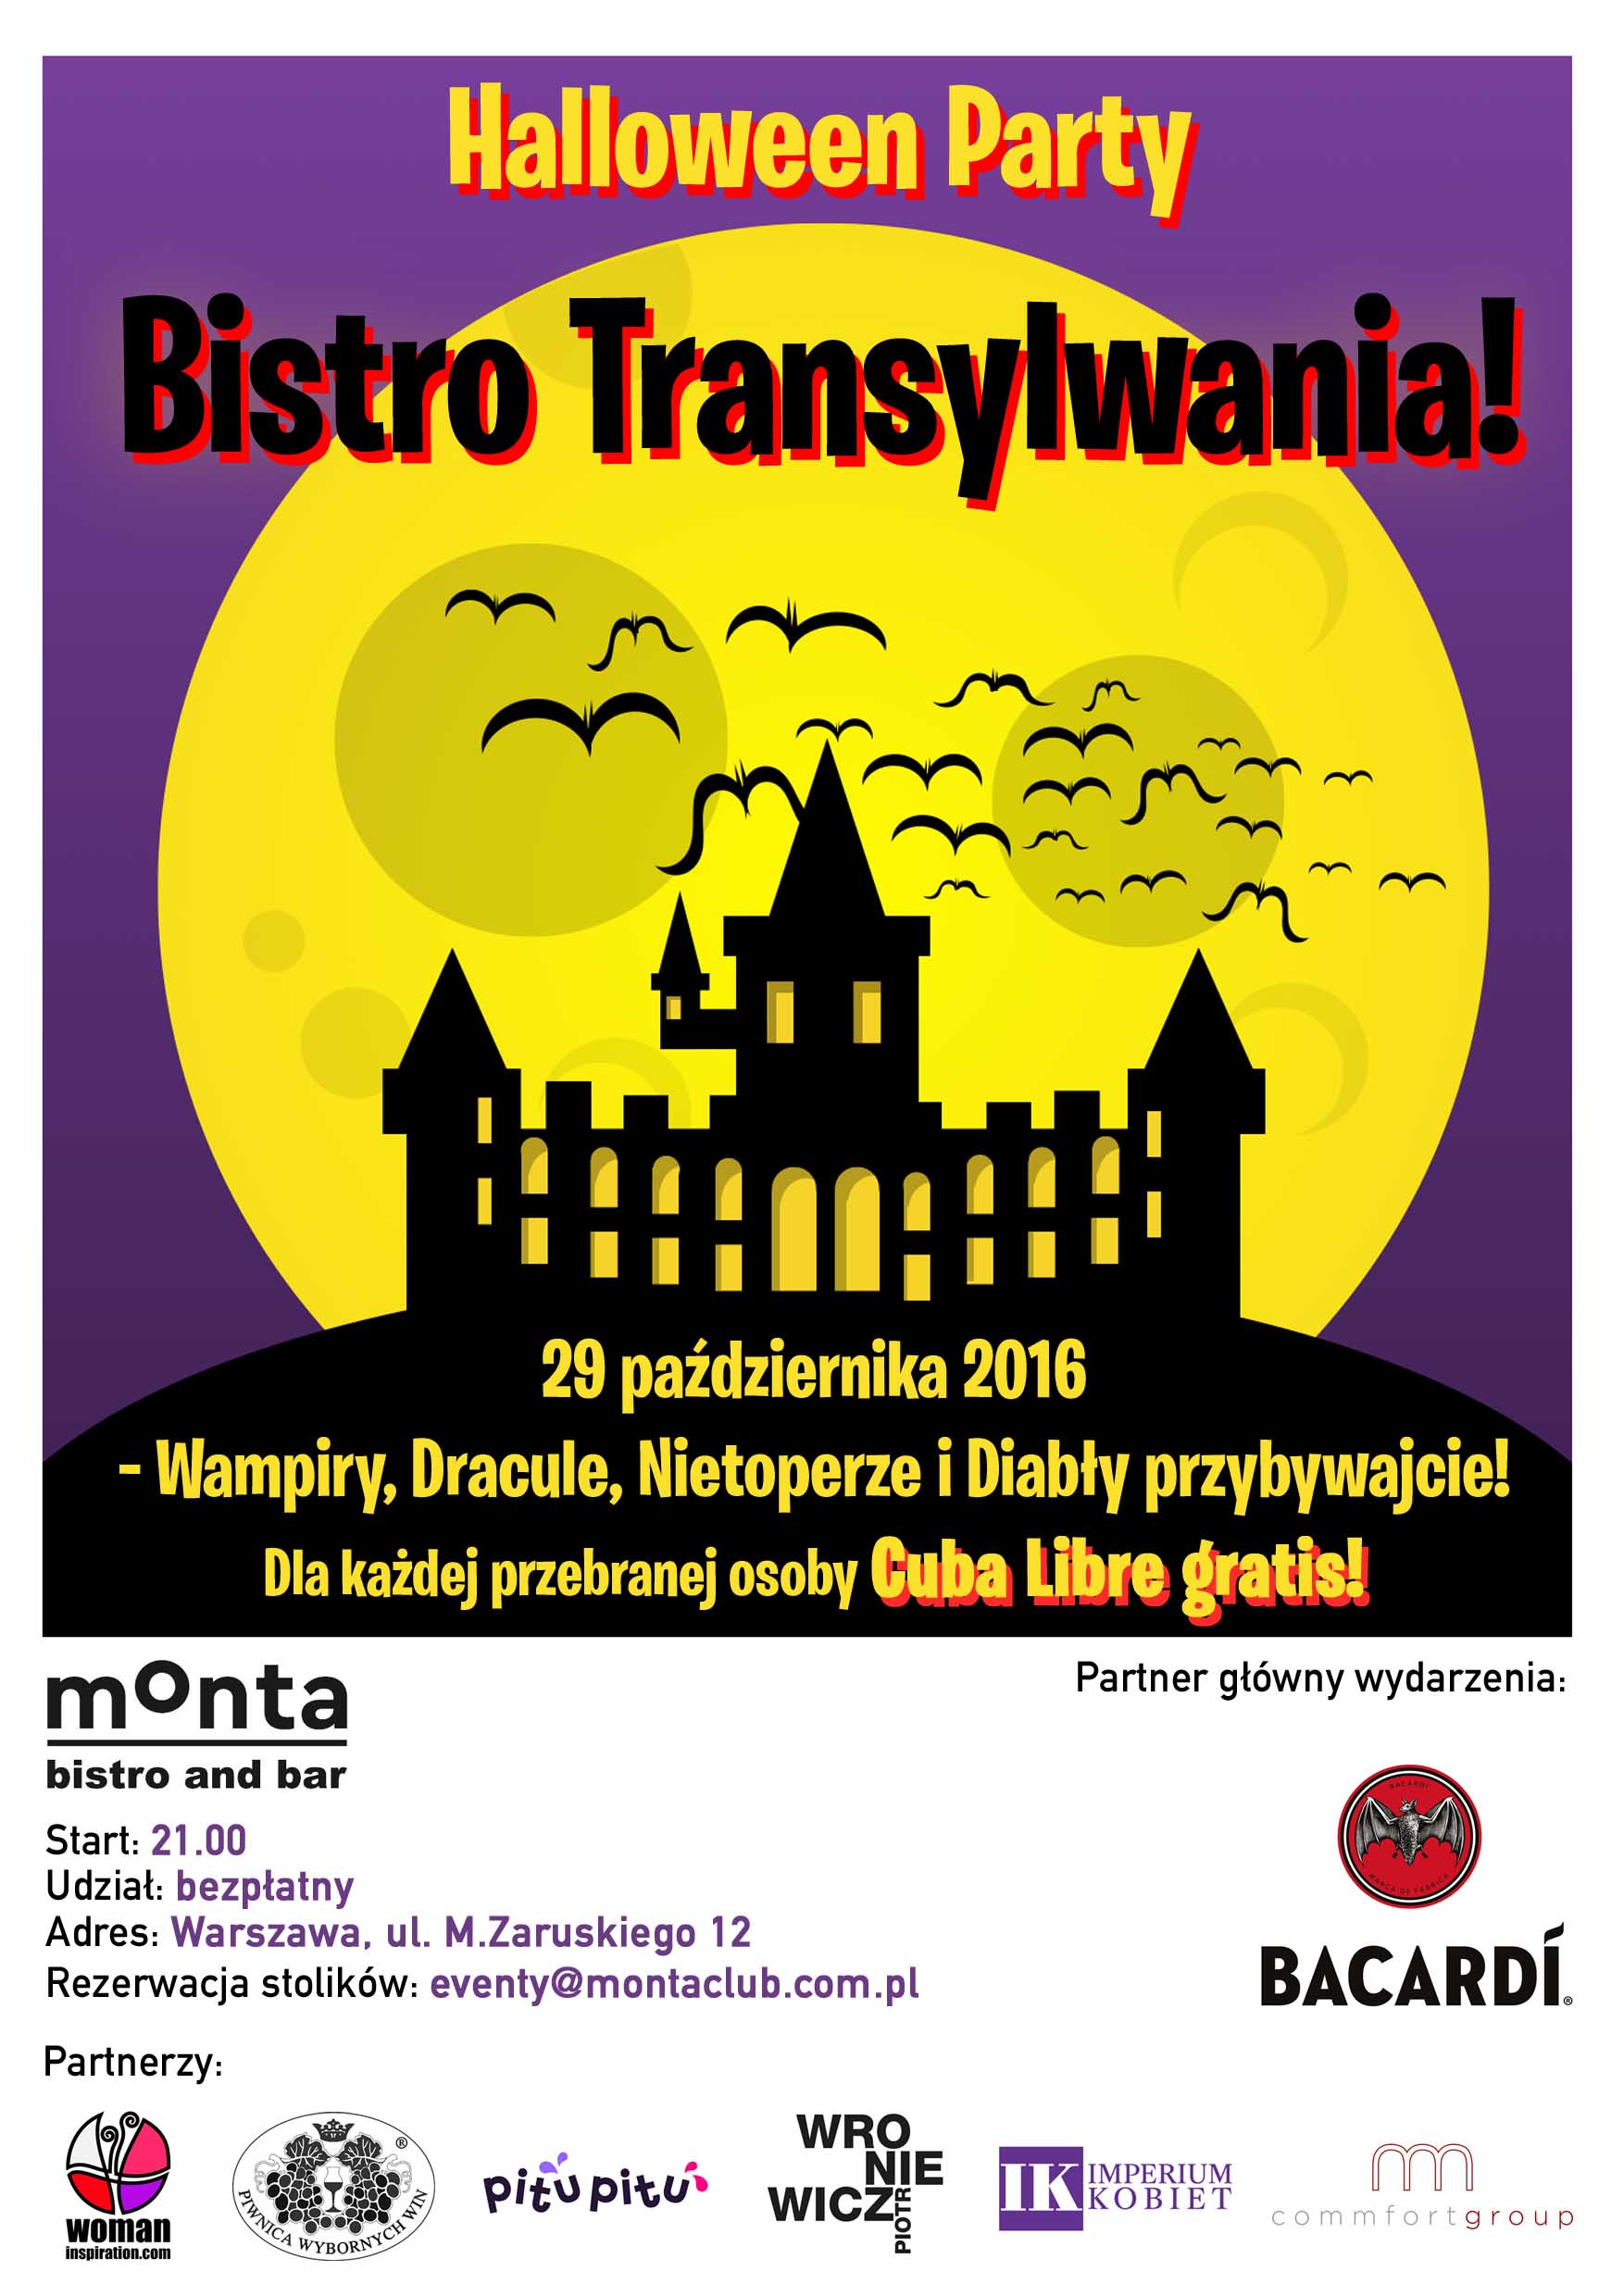 Halloween Party: Bistro Transylwania